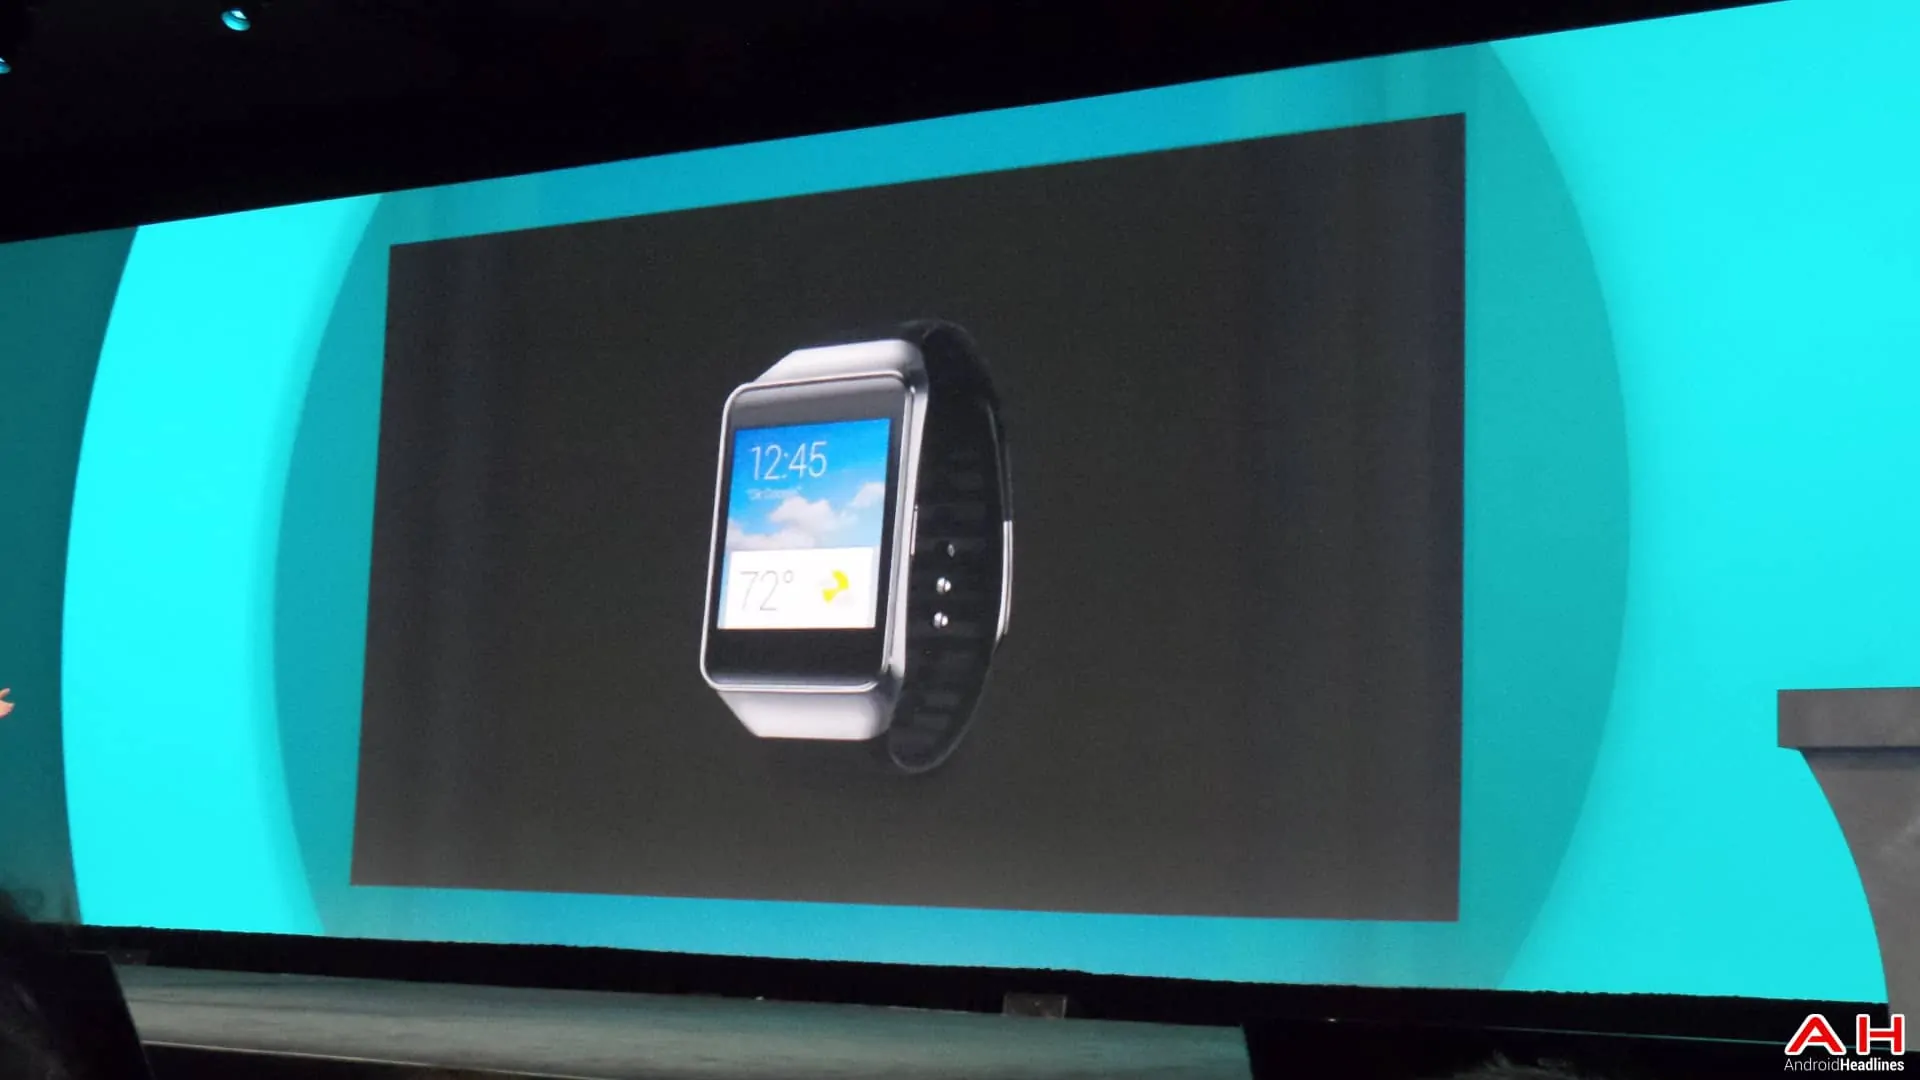 AH Google IO 2014 308 of 18 Android Wear Samsung